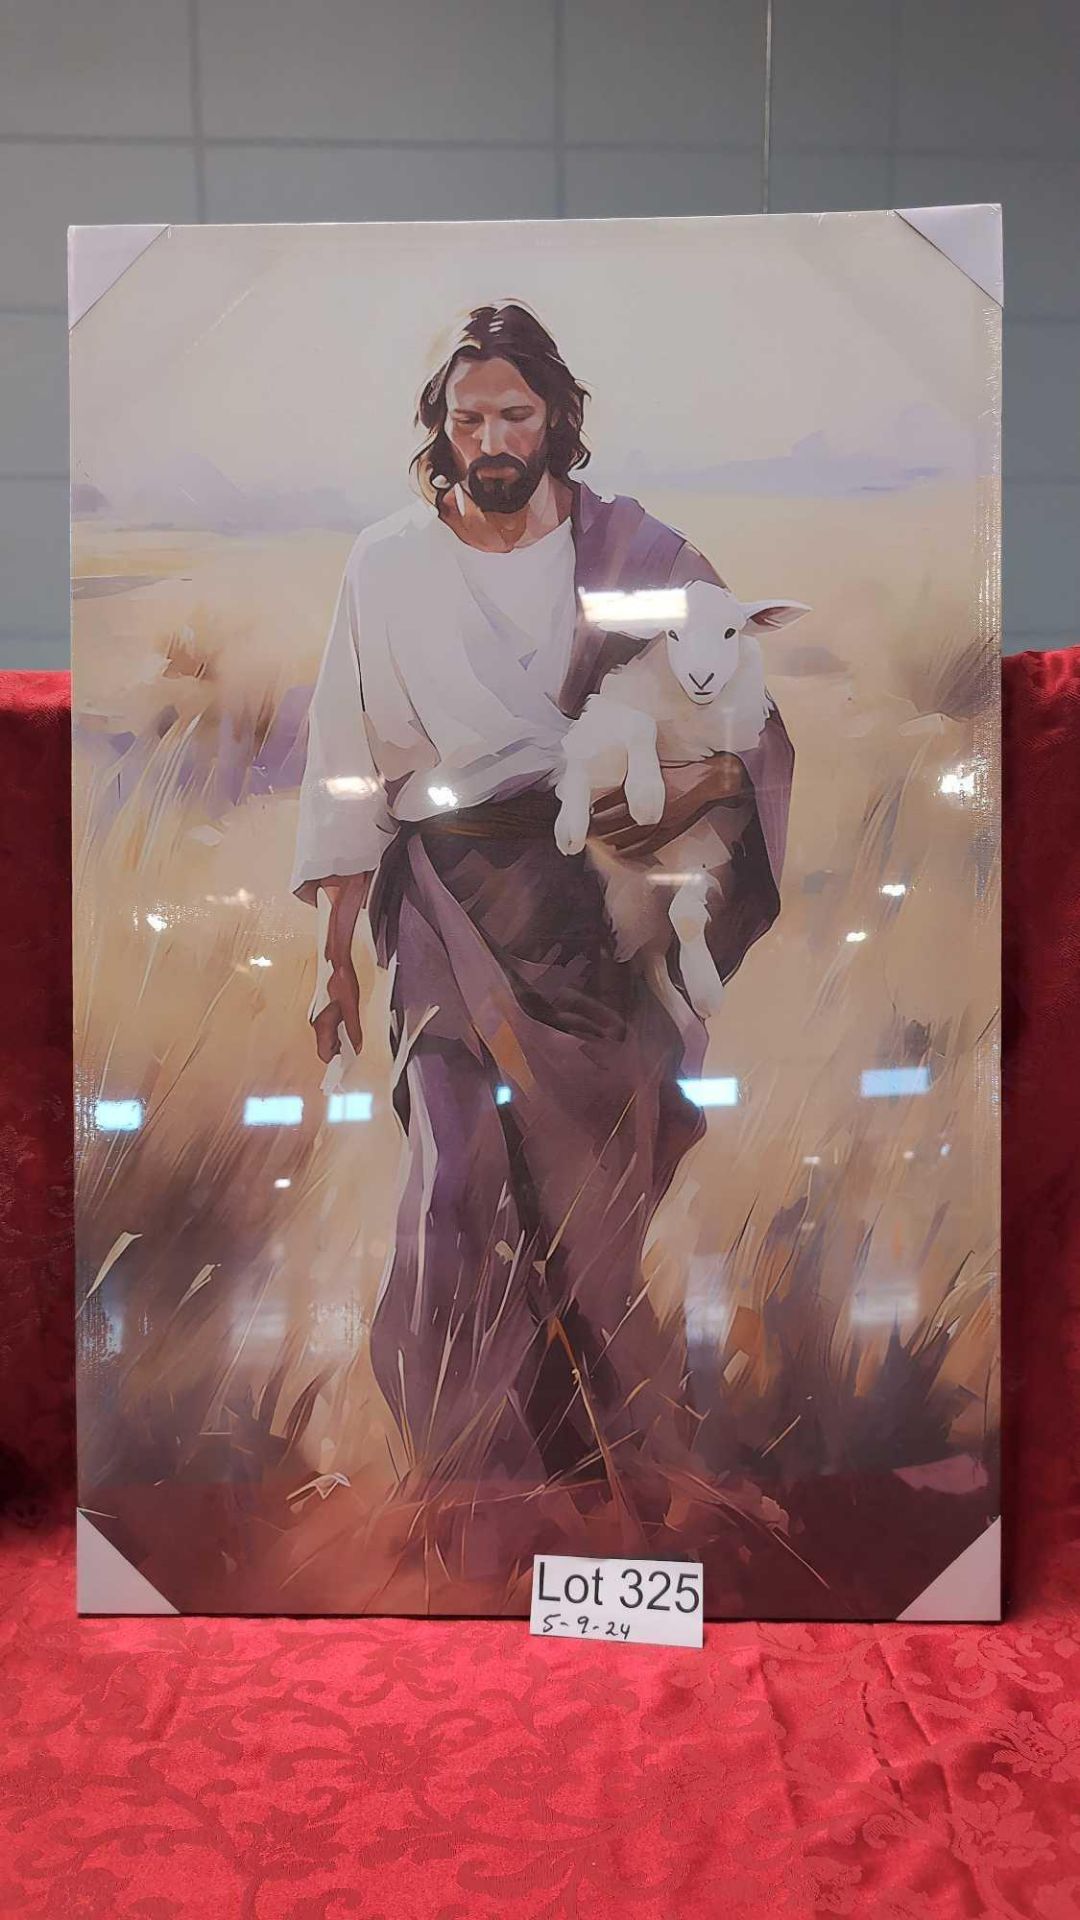 Framed Canvas 24" x 36" Christ w/lamb